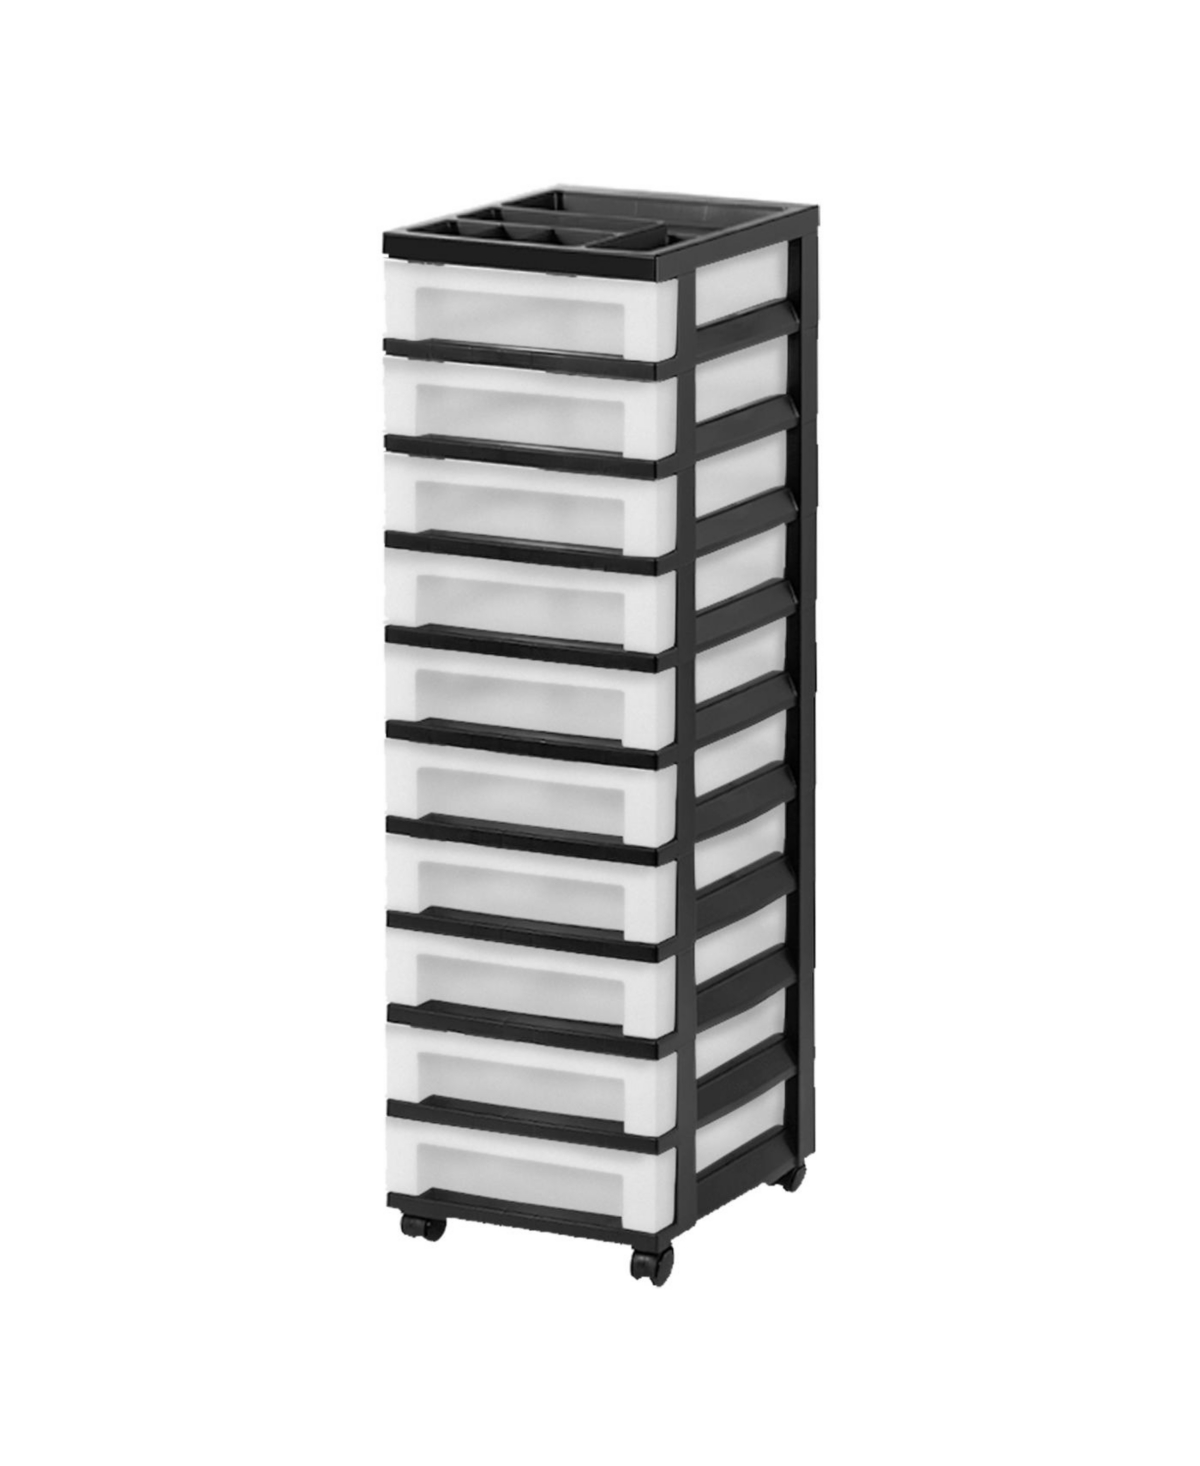 10-Drawer Storage Cart with Organizer Top, Black - Black